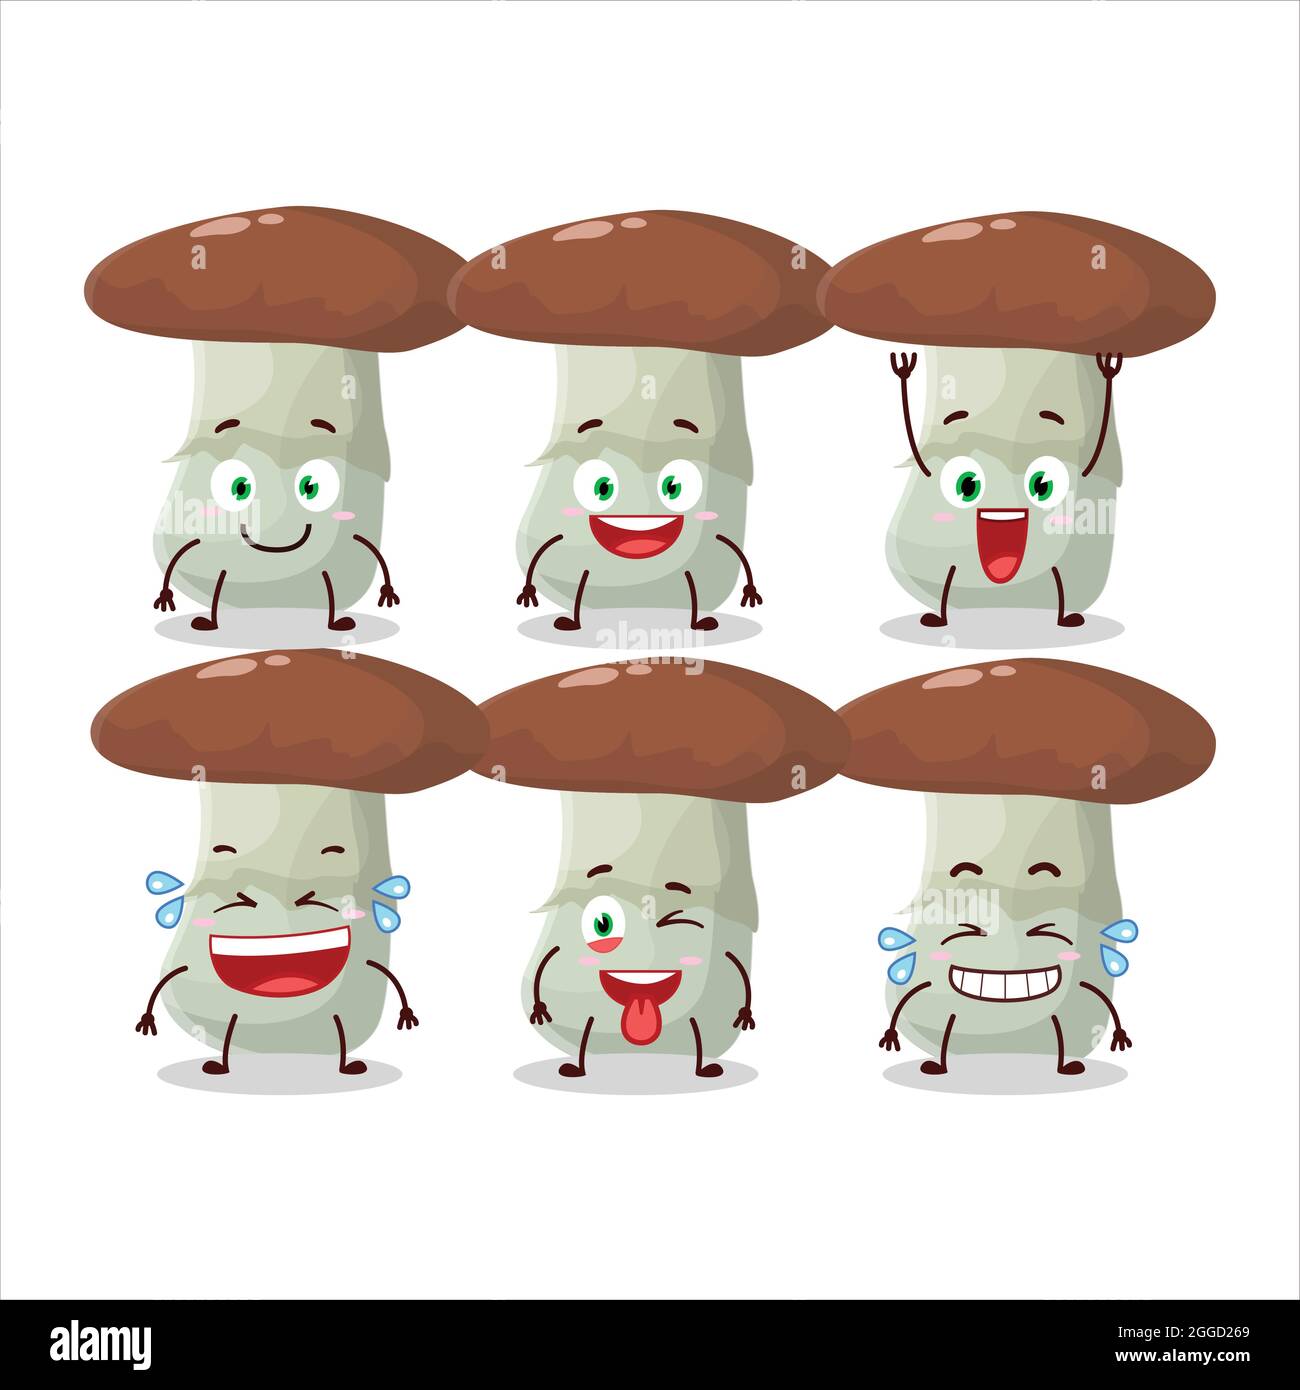 Cartoon-Charakter von Suillus Pilz mit Lächeln Ausdruck. Vektorgrafik Stock Vektor